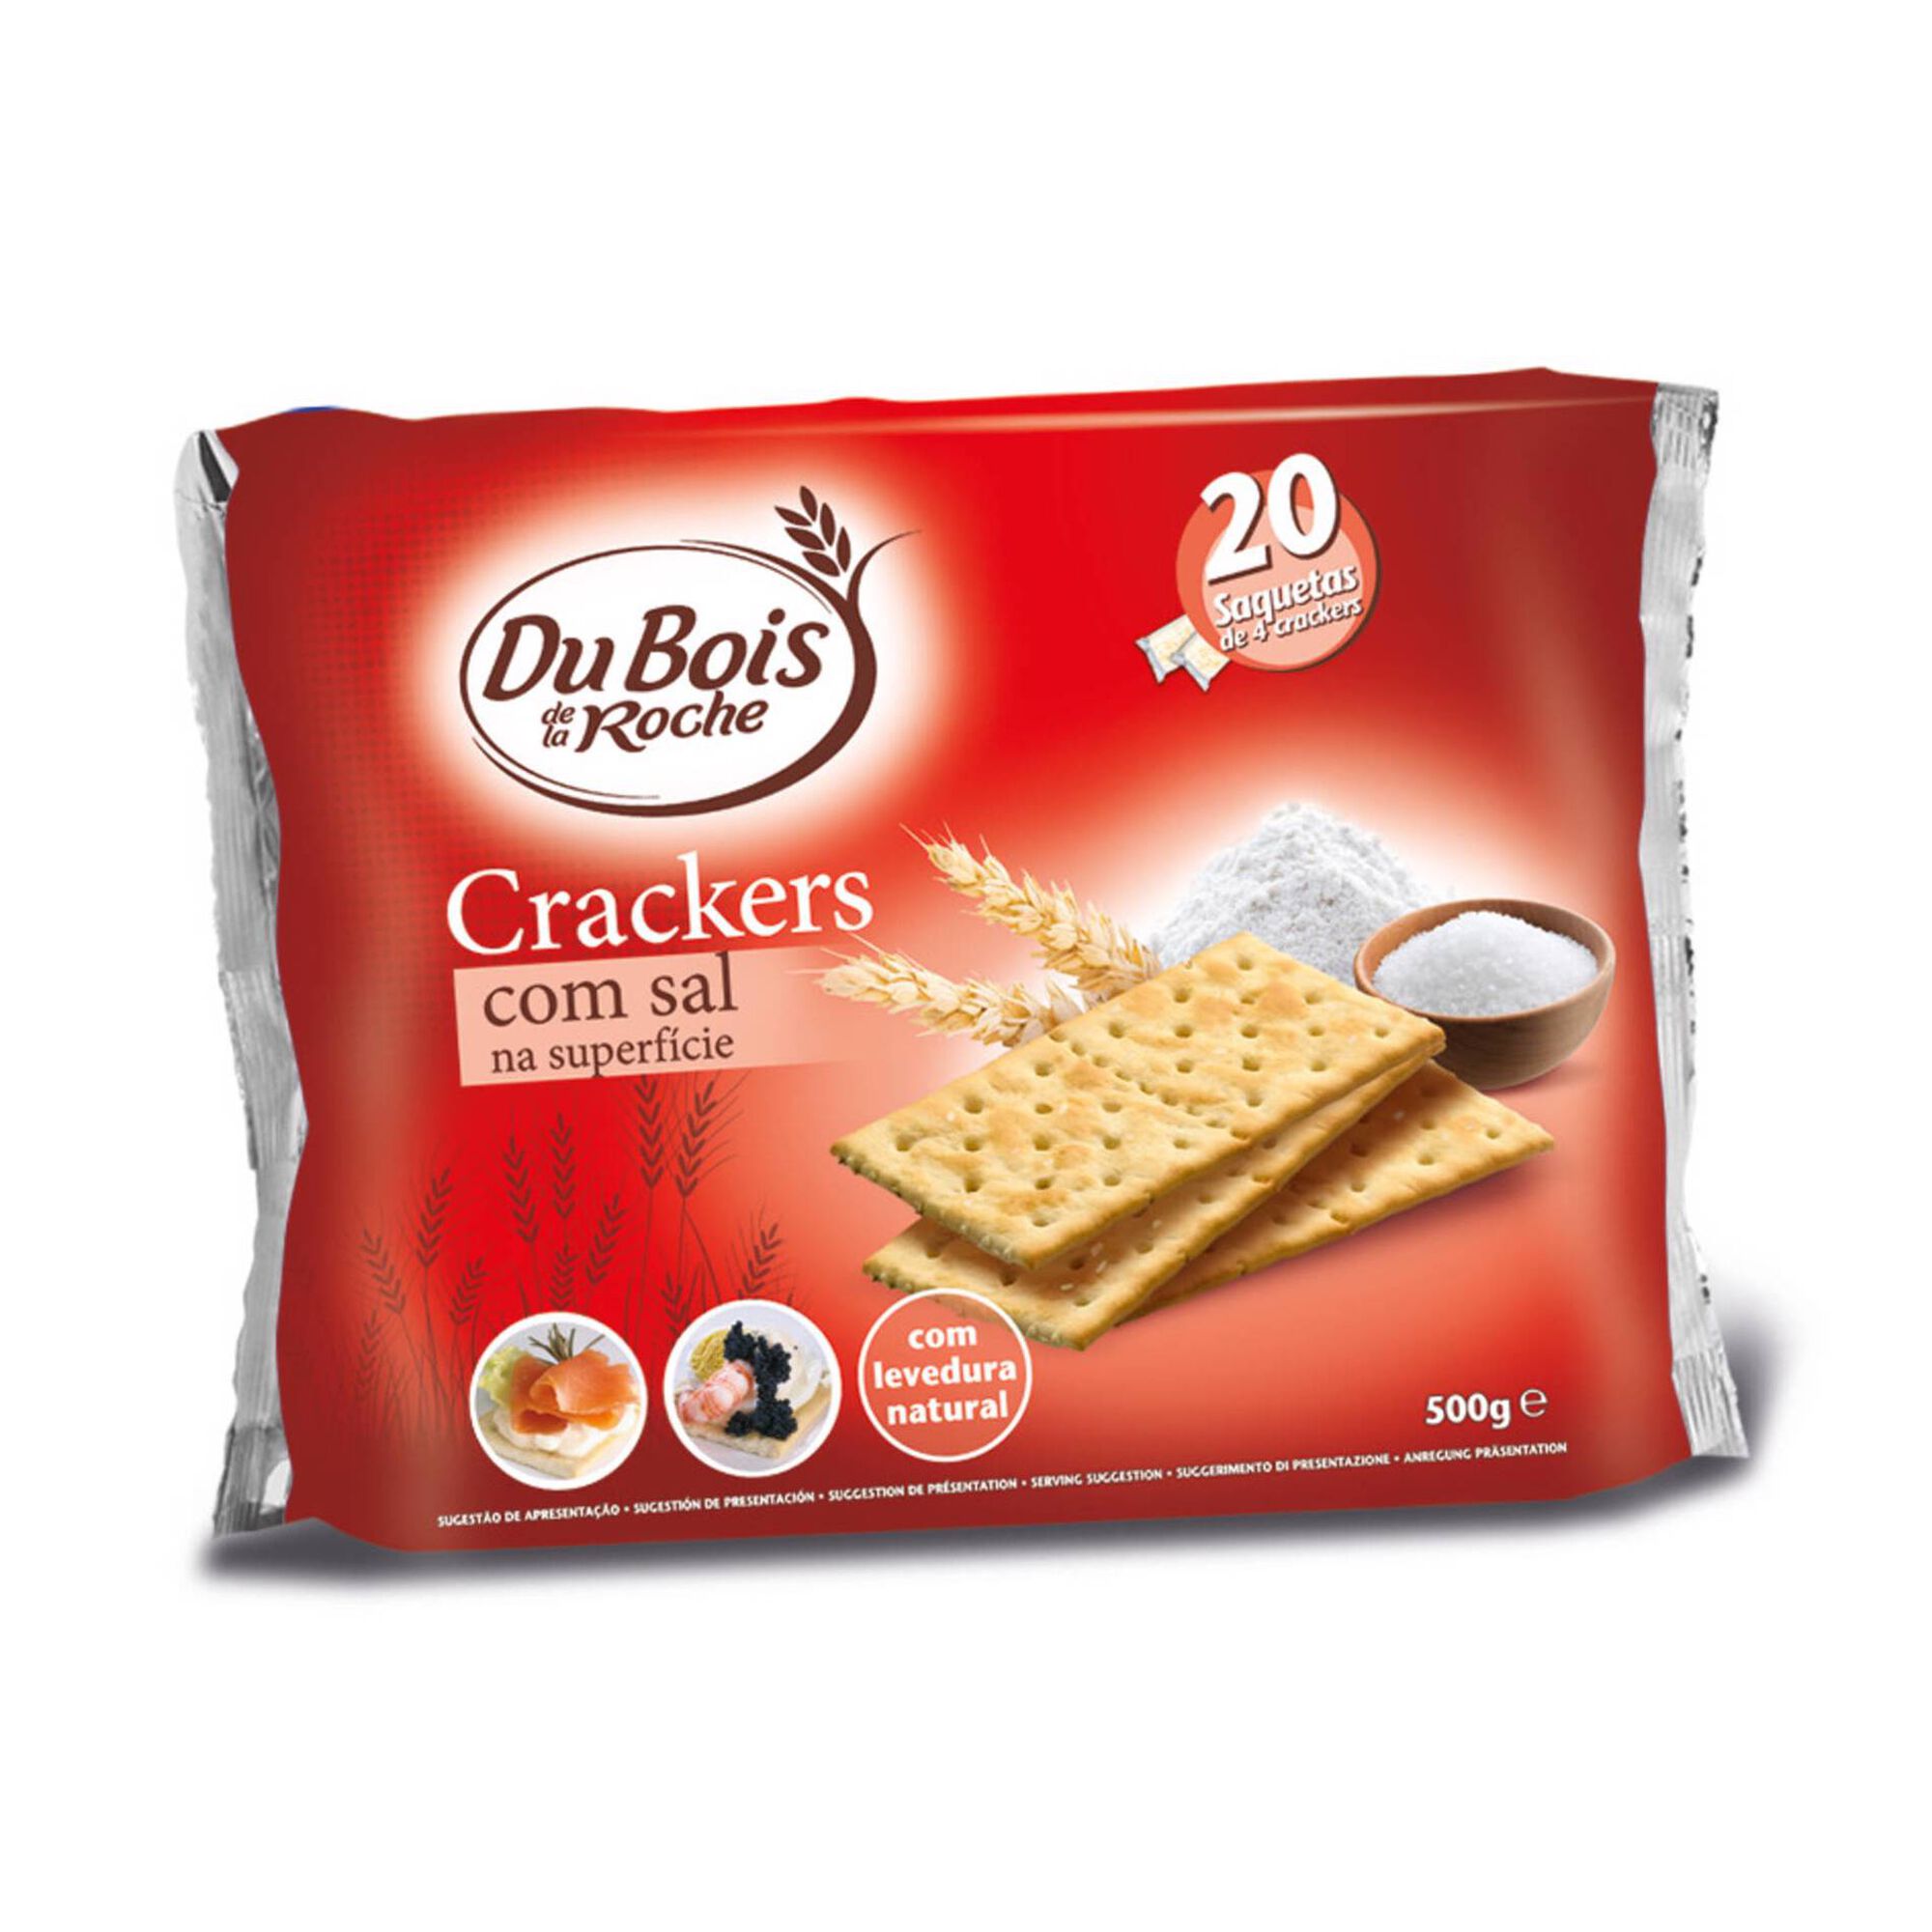 Bolachas Crackers com Sal